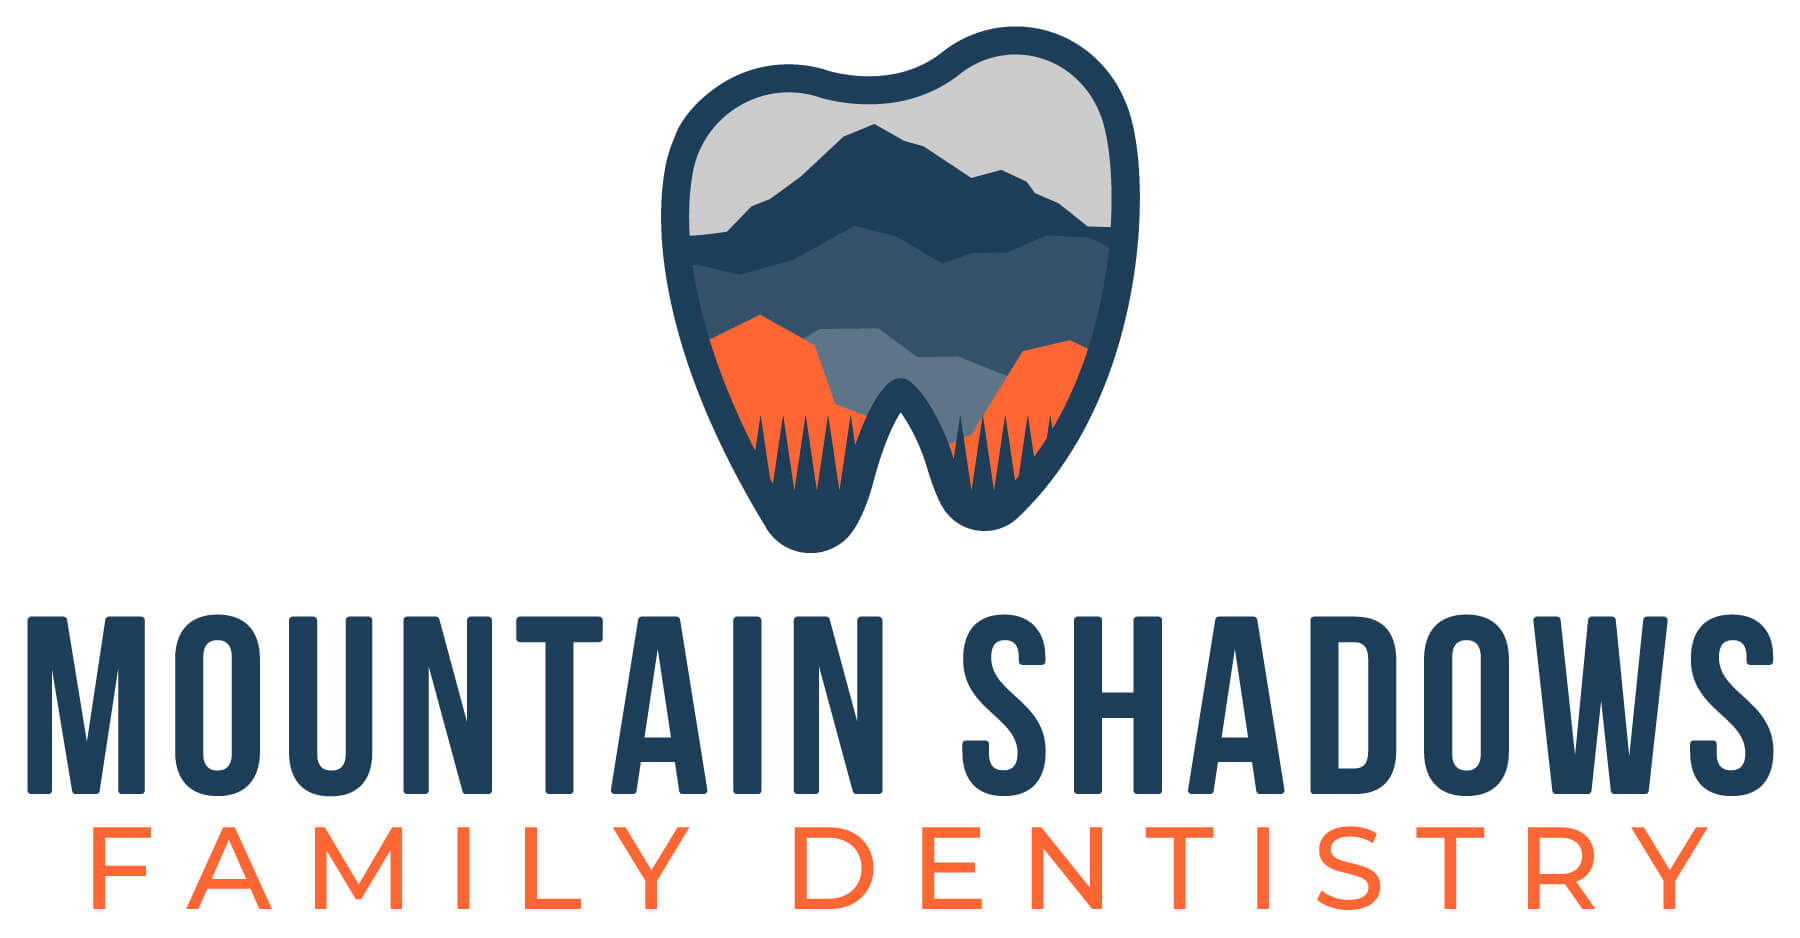 Colorado Springs DDS - Mountain Shadow Family Dentist logo